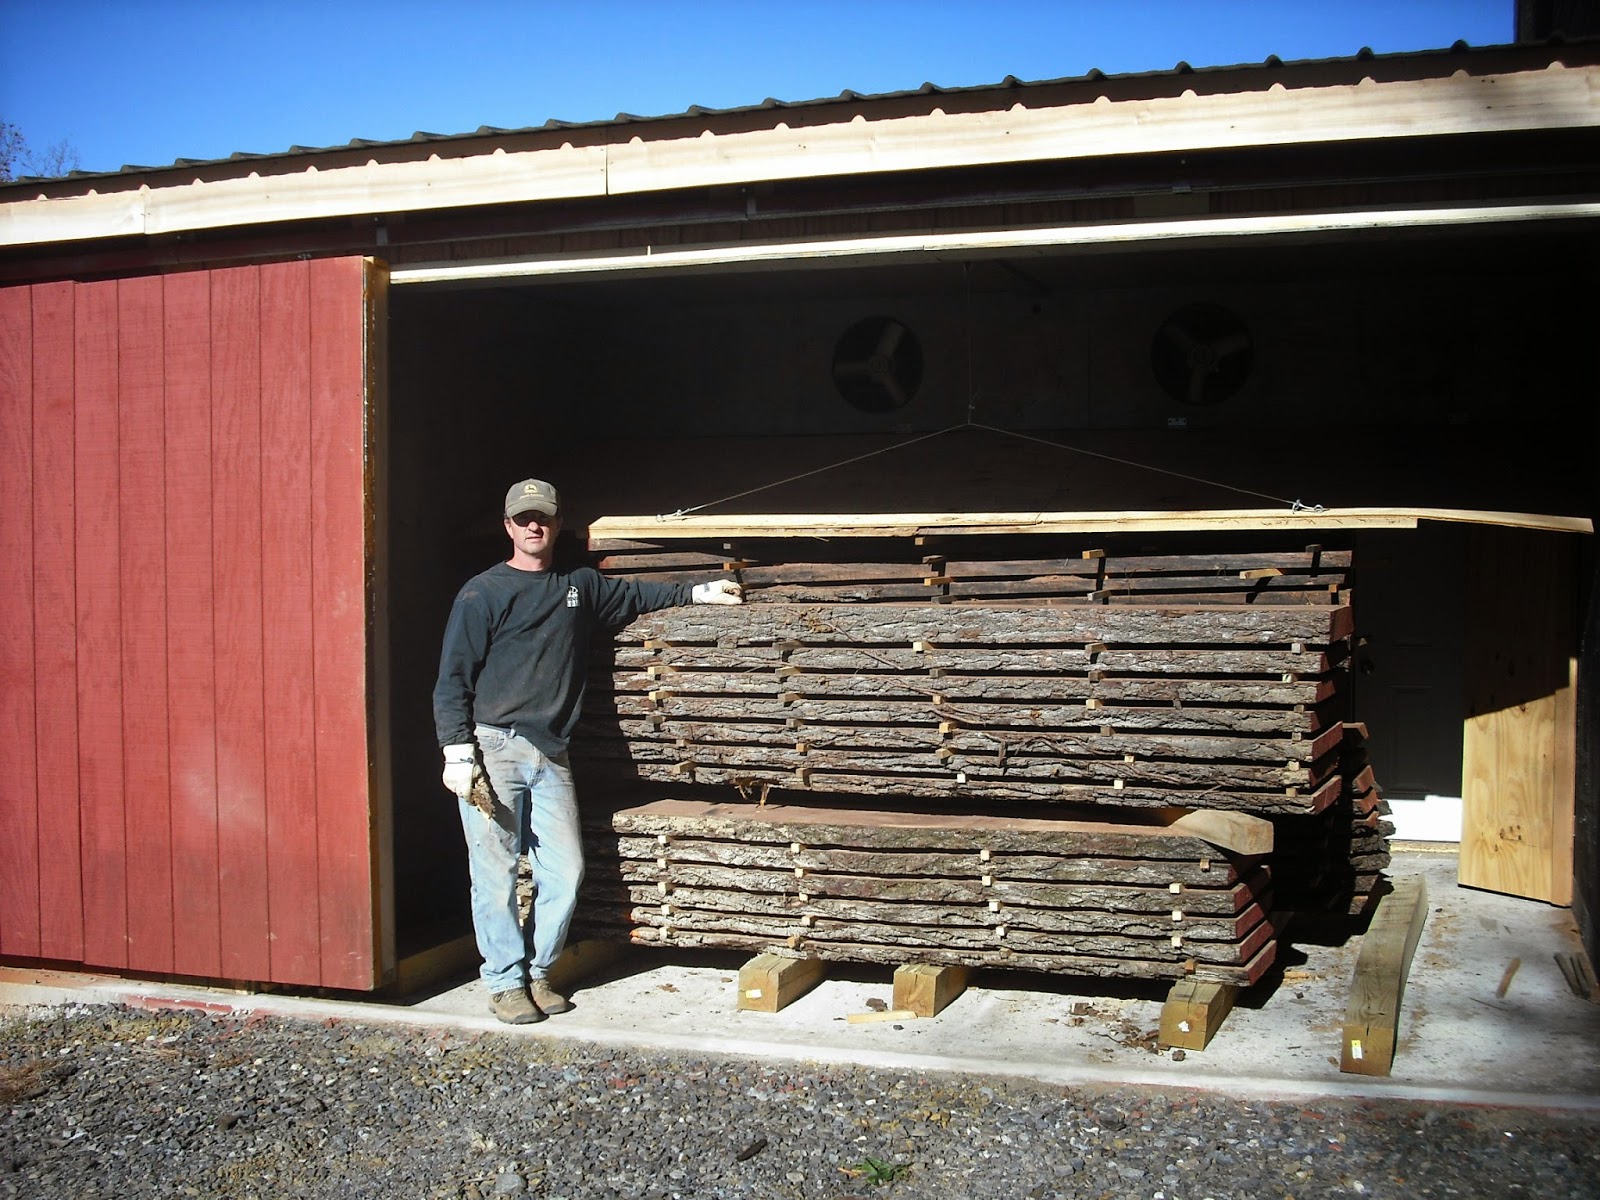 Floyd Virginia in the Blue Ridge Mountains: Solar Kiln at 